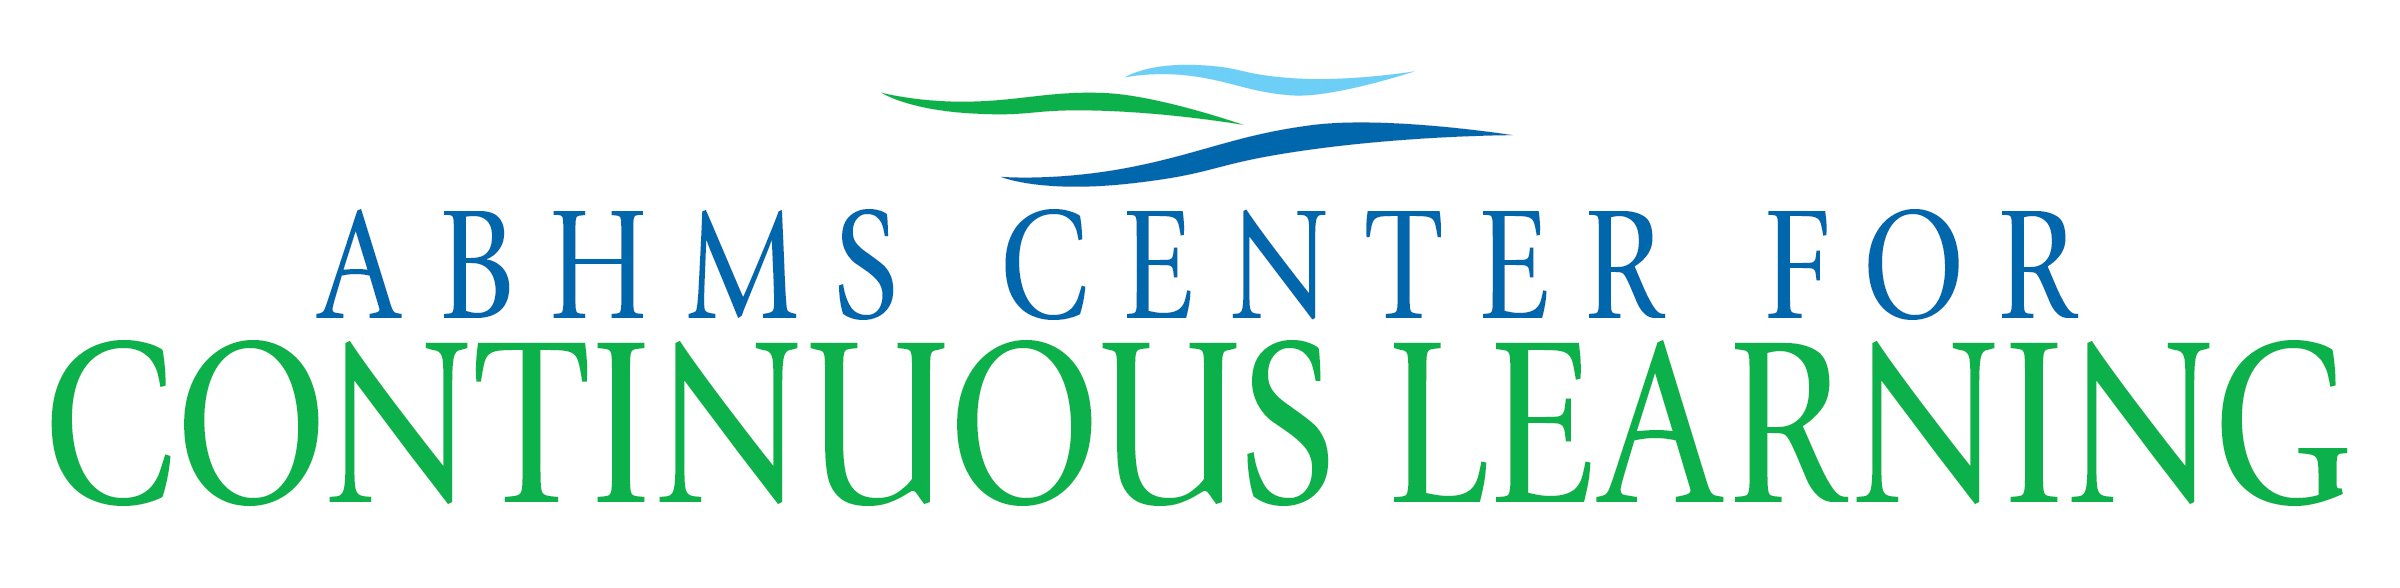 CCL logo rgb2.jpg